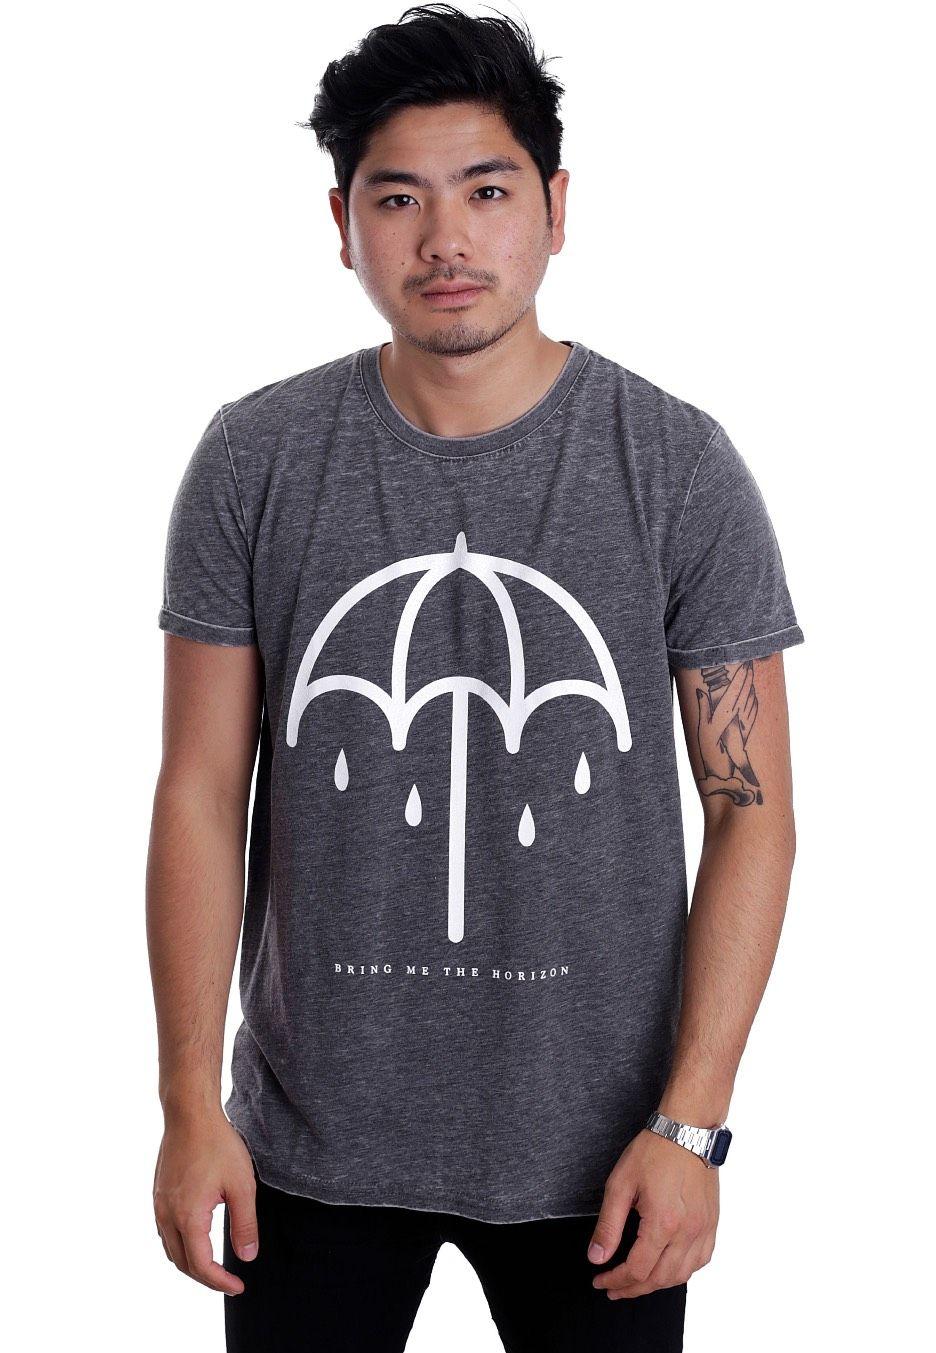 Bring Me the Horizon Umbrella Logo - Bring Me The Horizon Burnout Grey Shirt